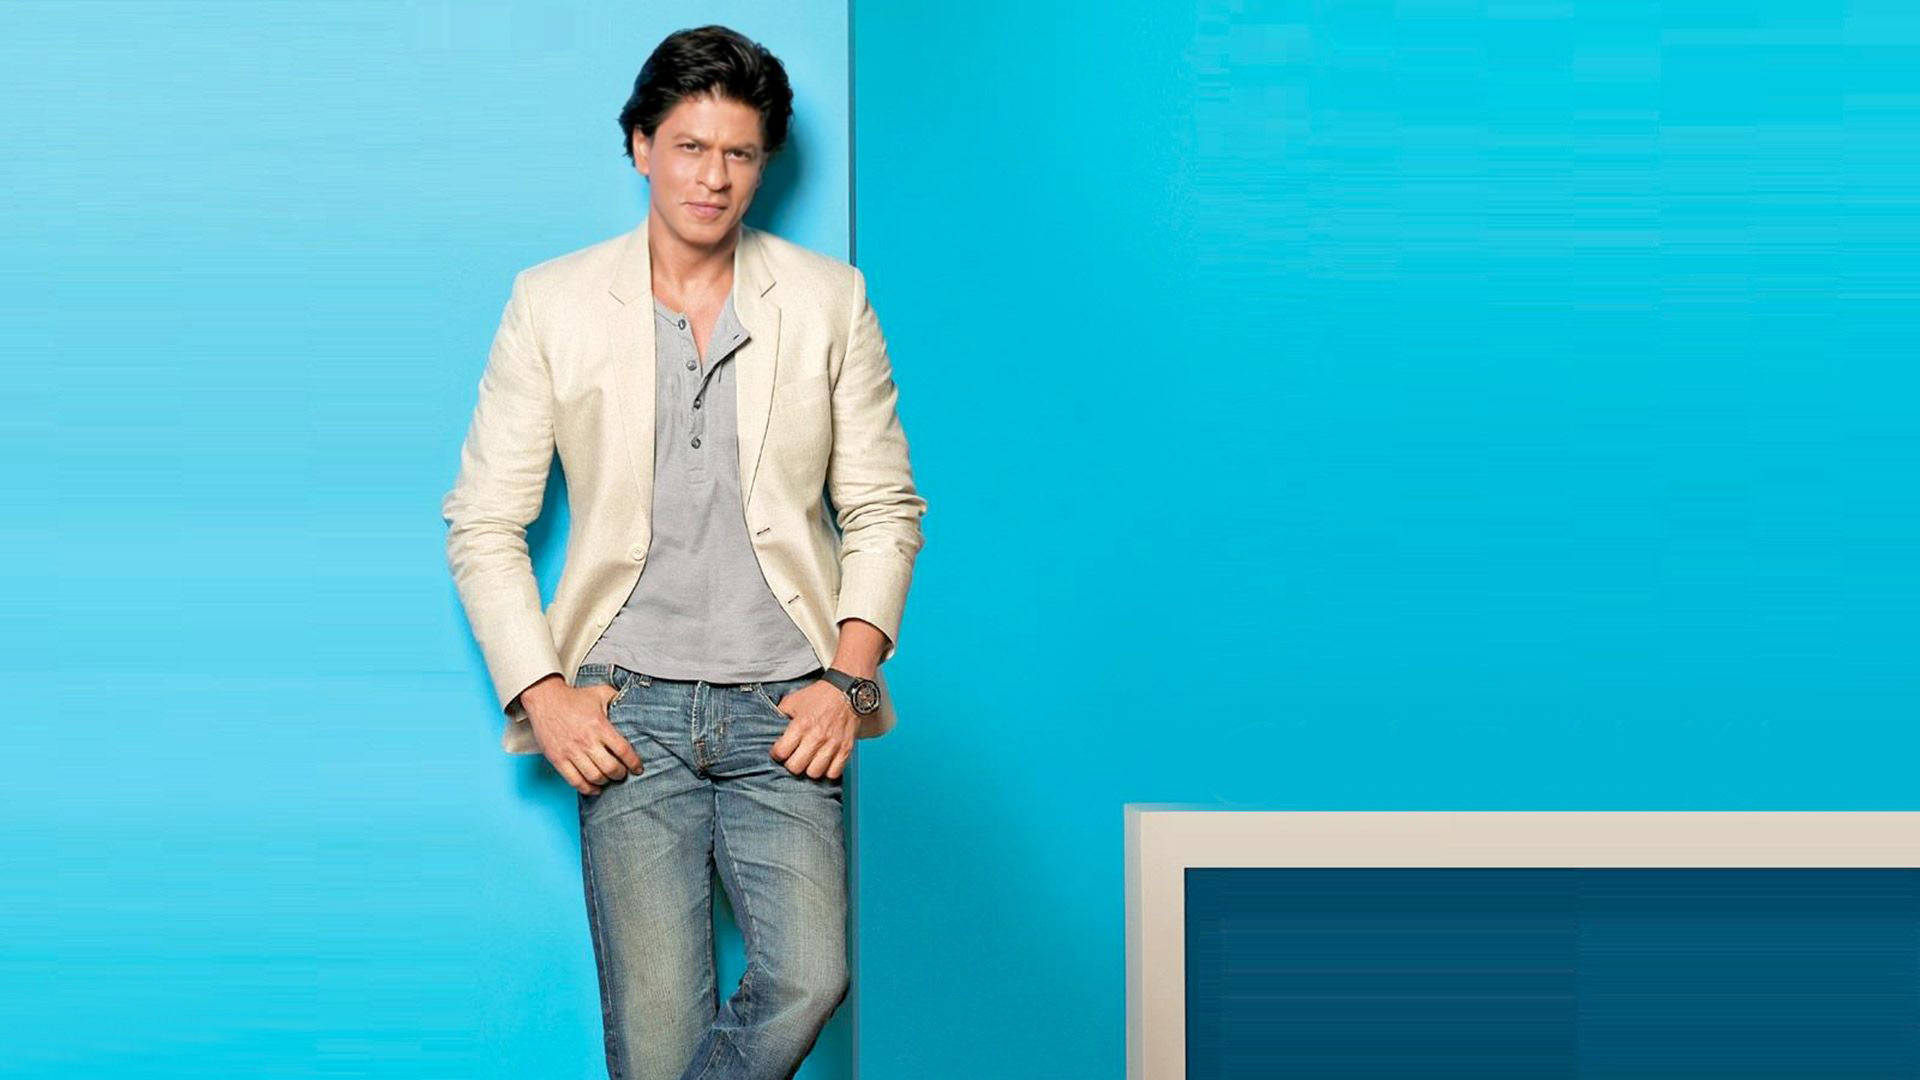 Shah Rukh Khan Blue Background Wallpaper